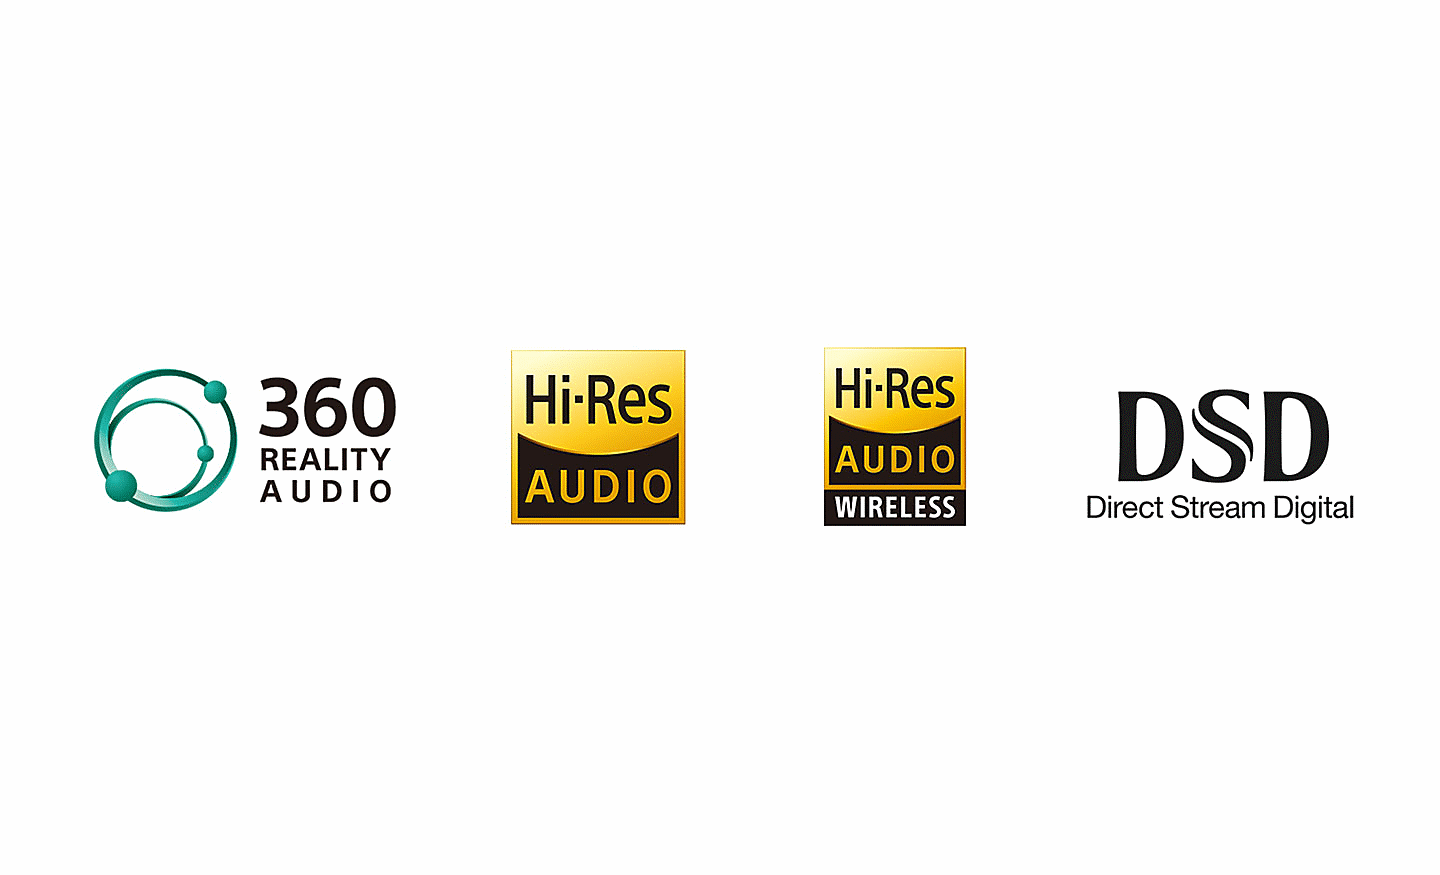 Logo 360 Reality Audio, logo Hi-Res Audio, logo Hi-Res Audio Wireless, logo DSD Direct Stream Digital